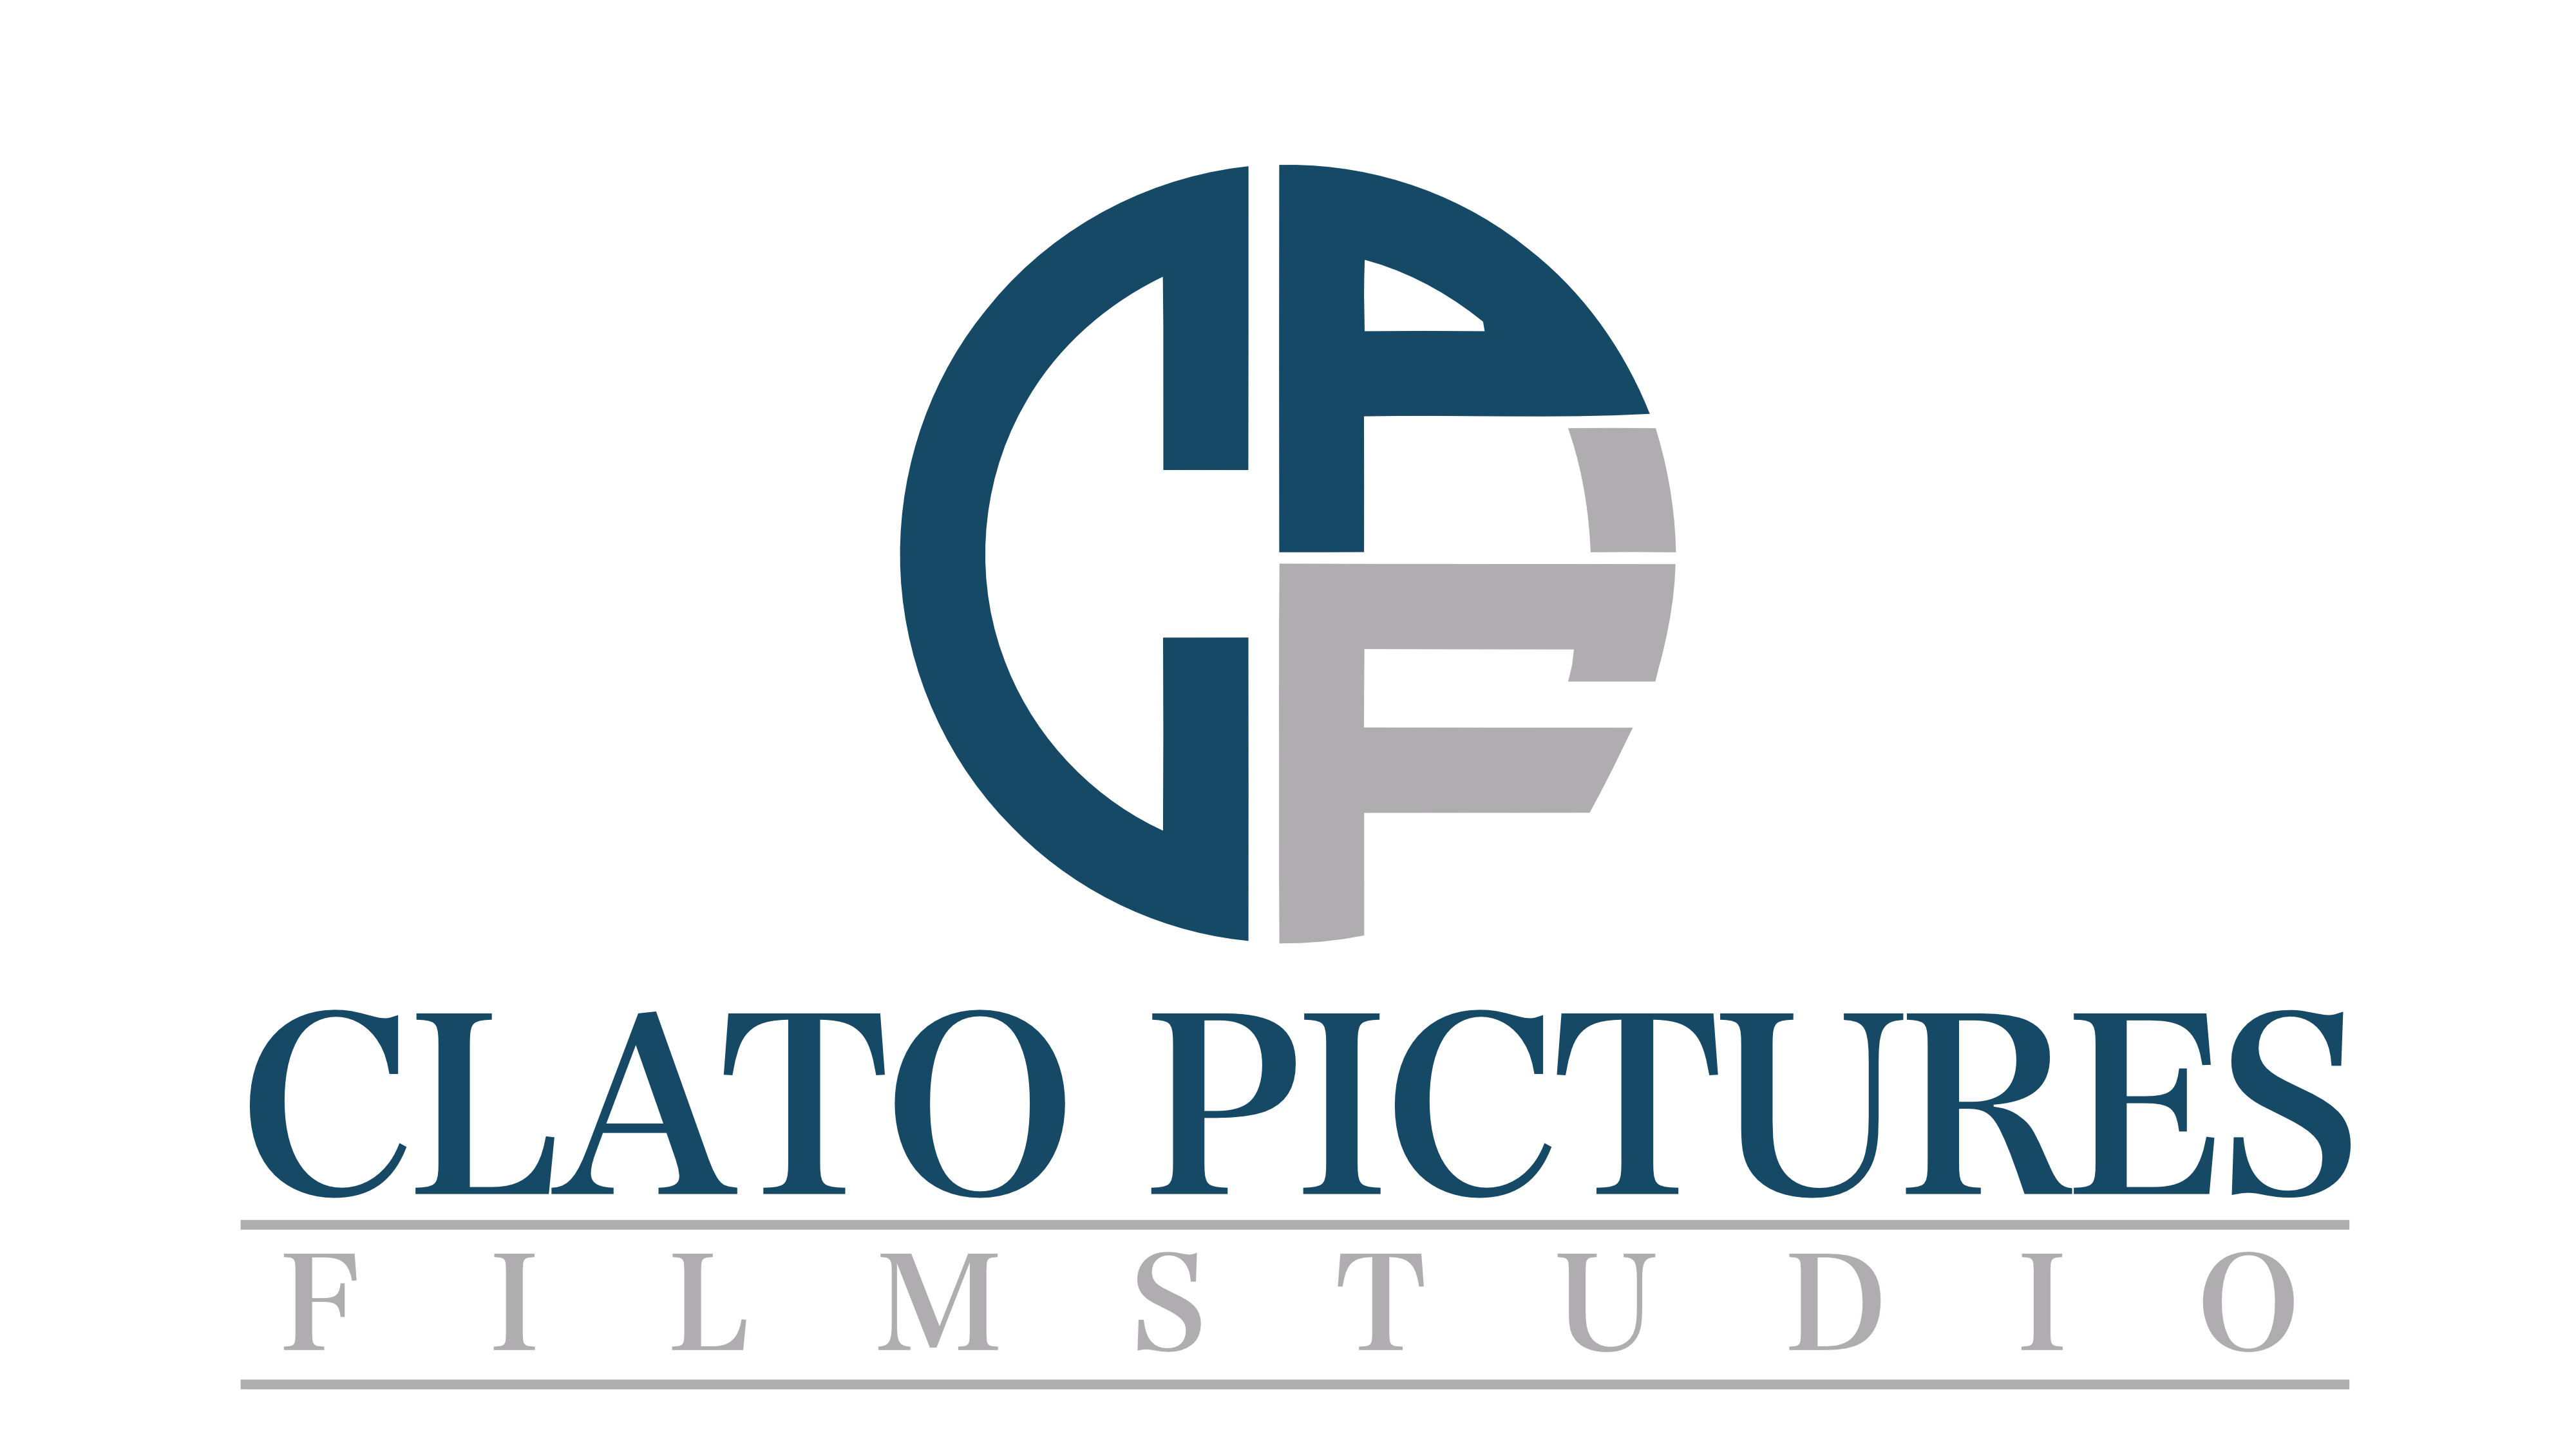 Clato Pictures Filmstudio logo